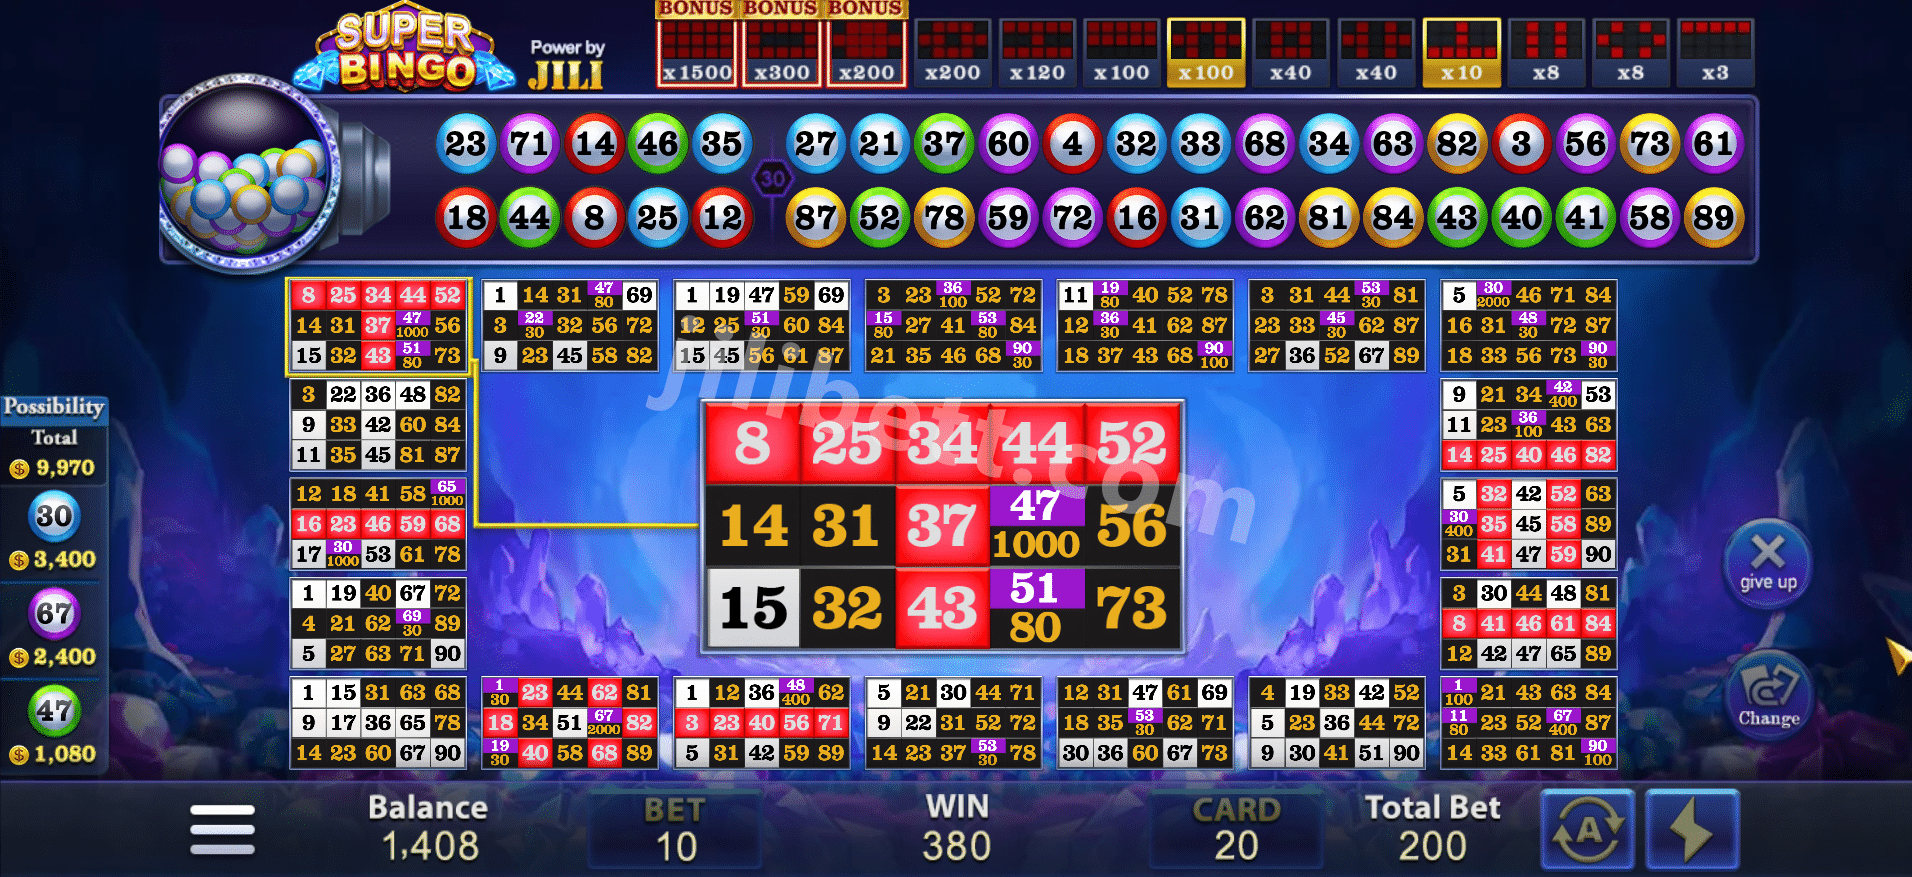 Super Bingo Interface-01